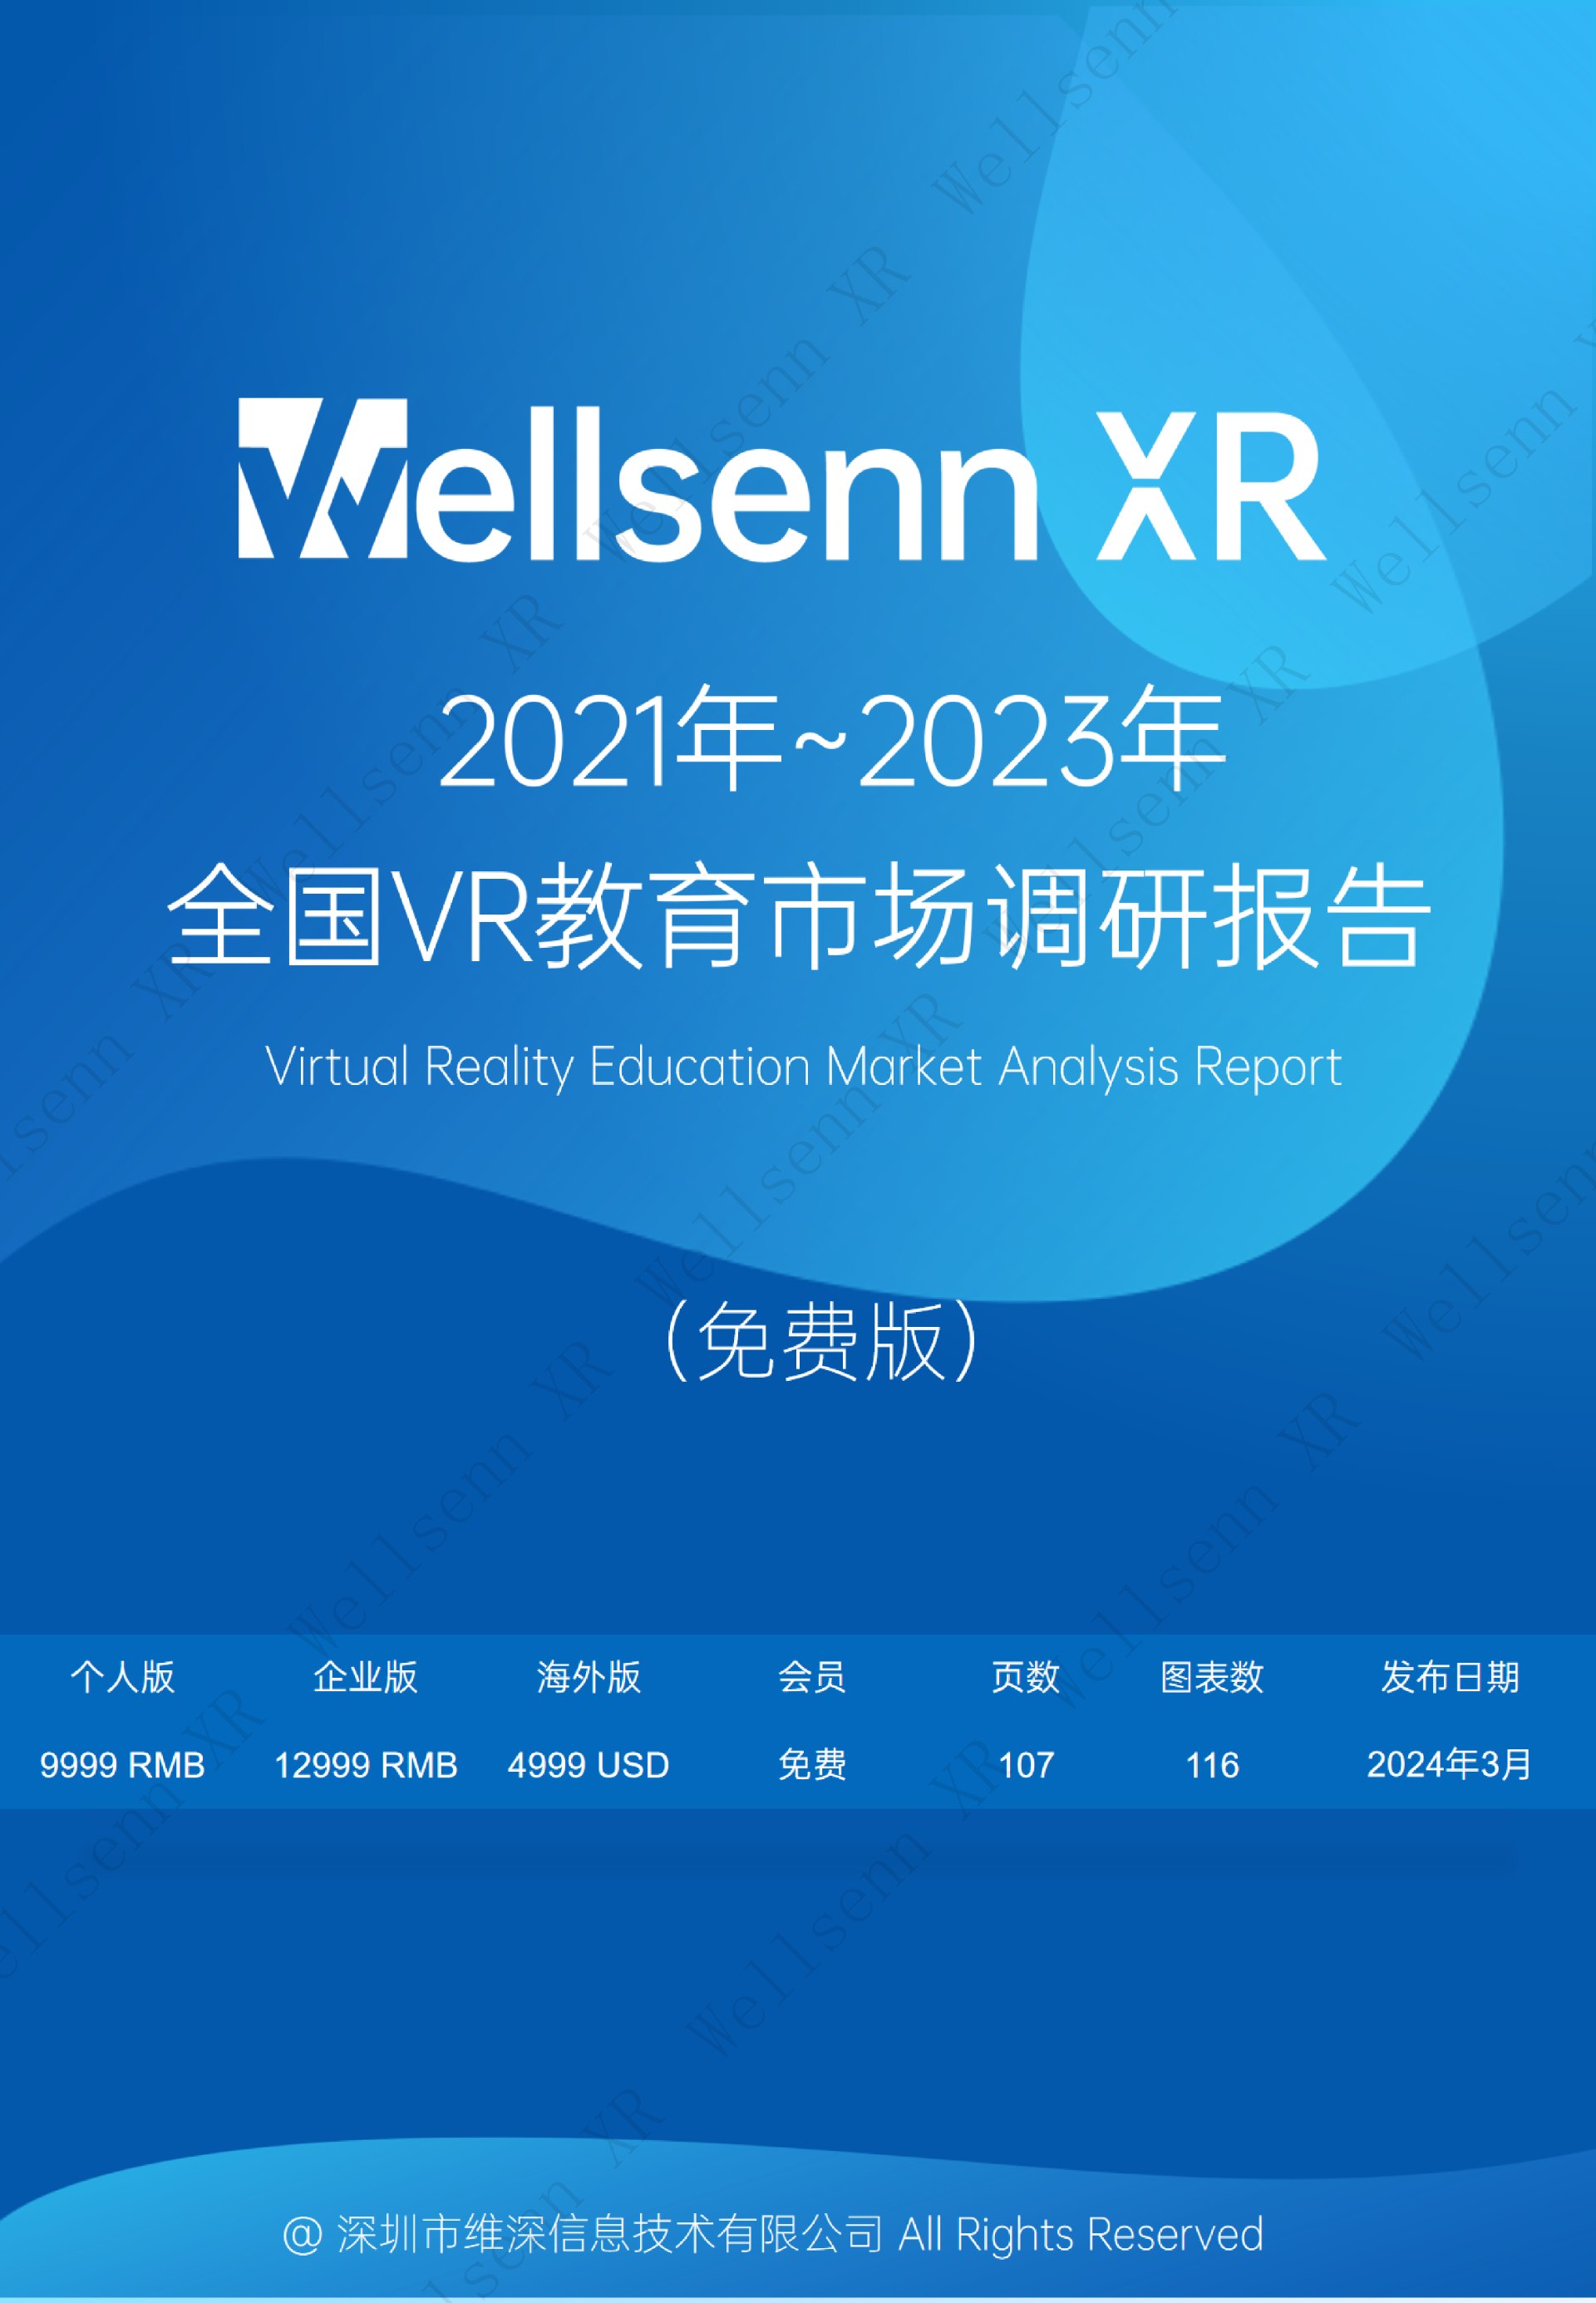 VR Education Report